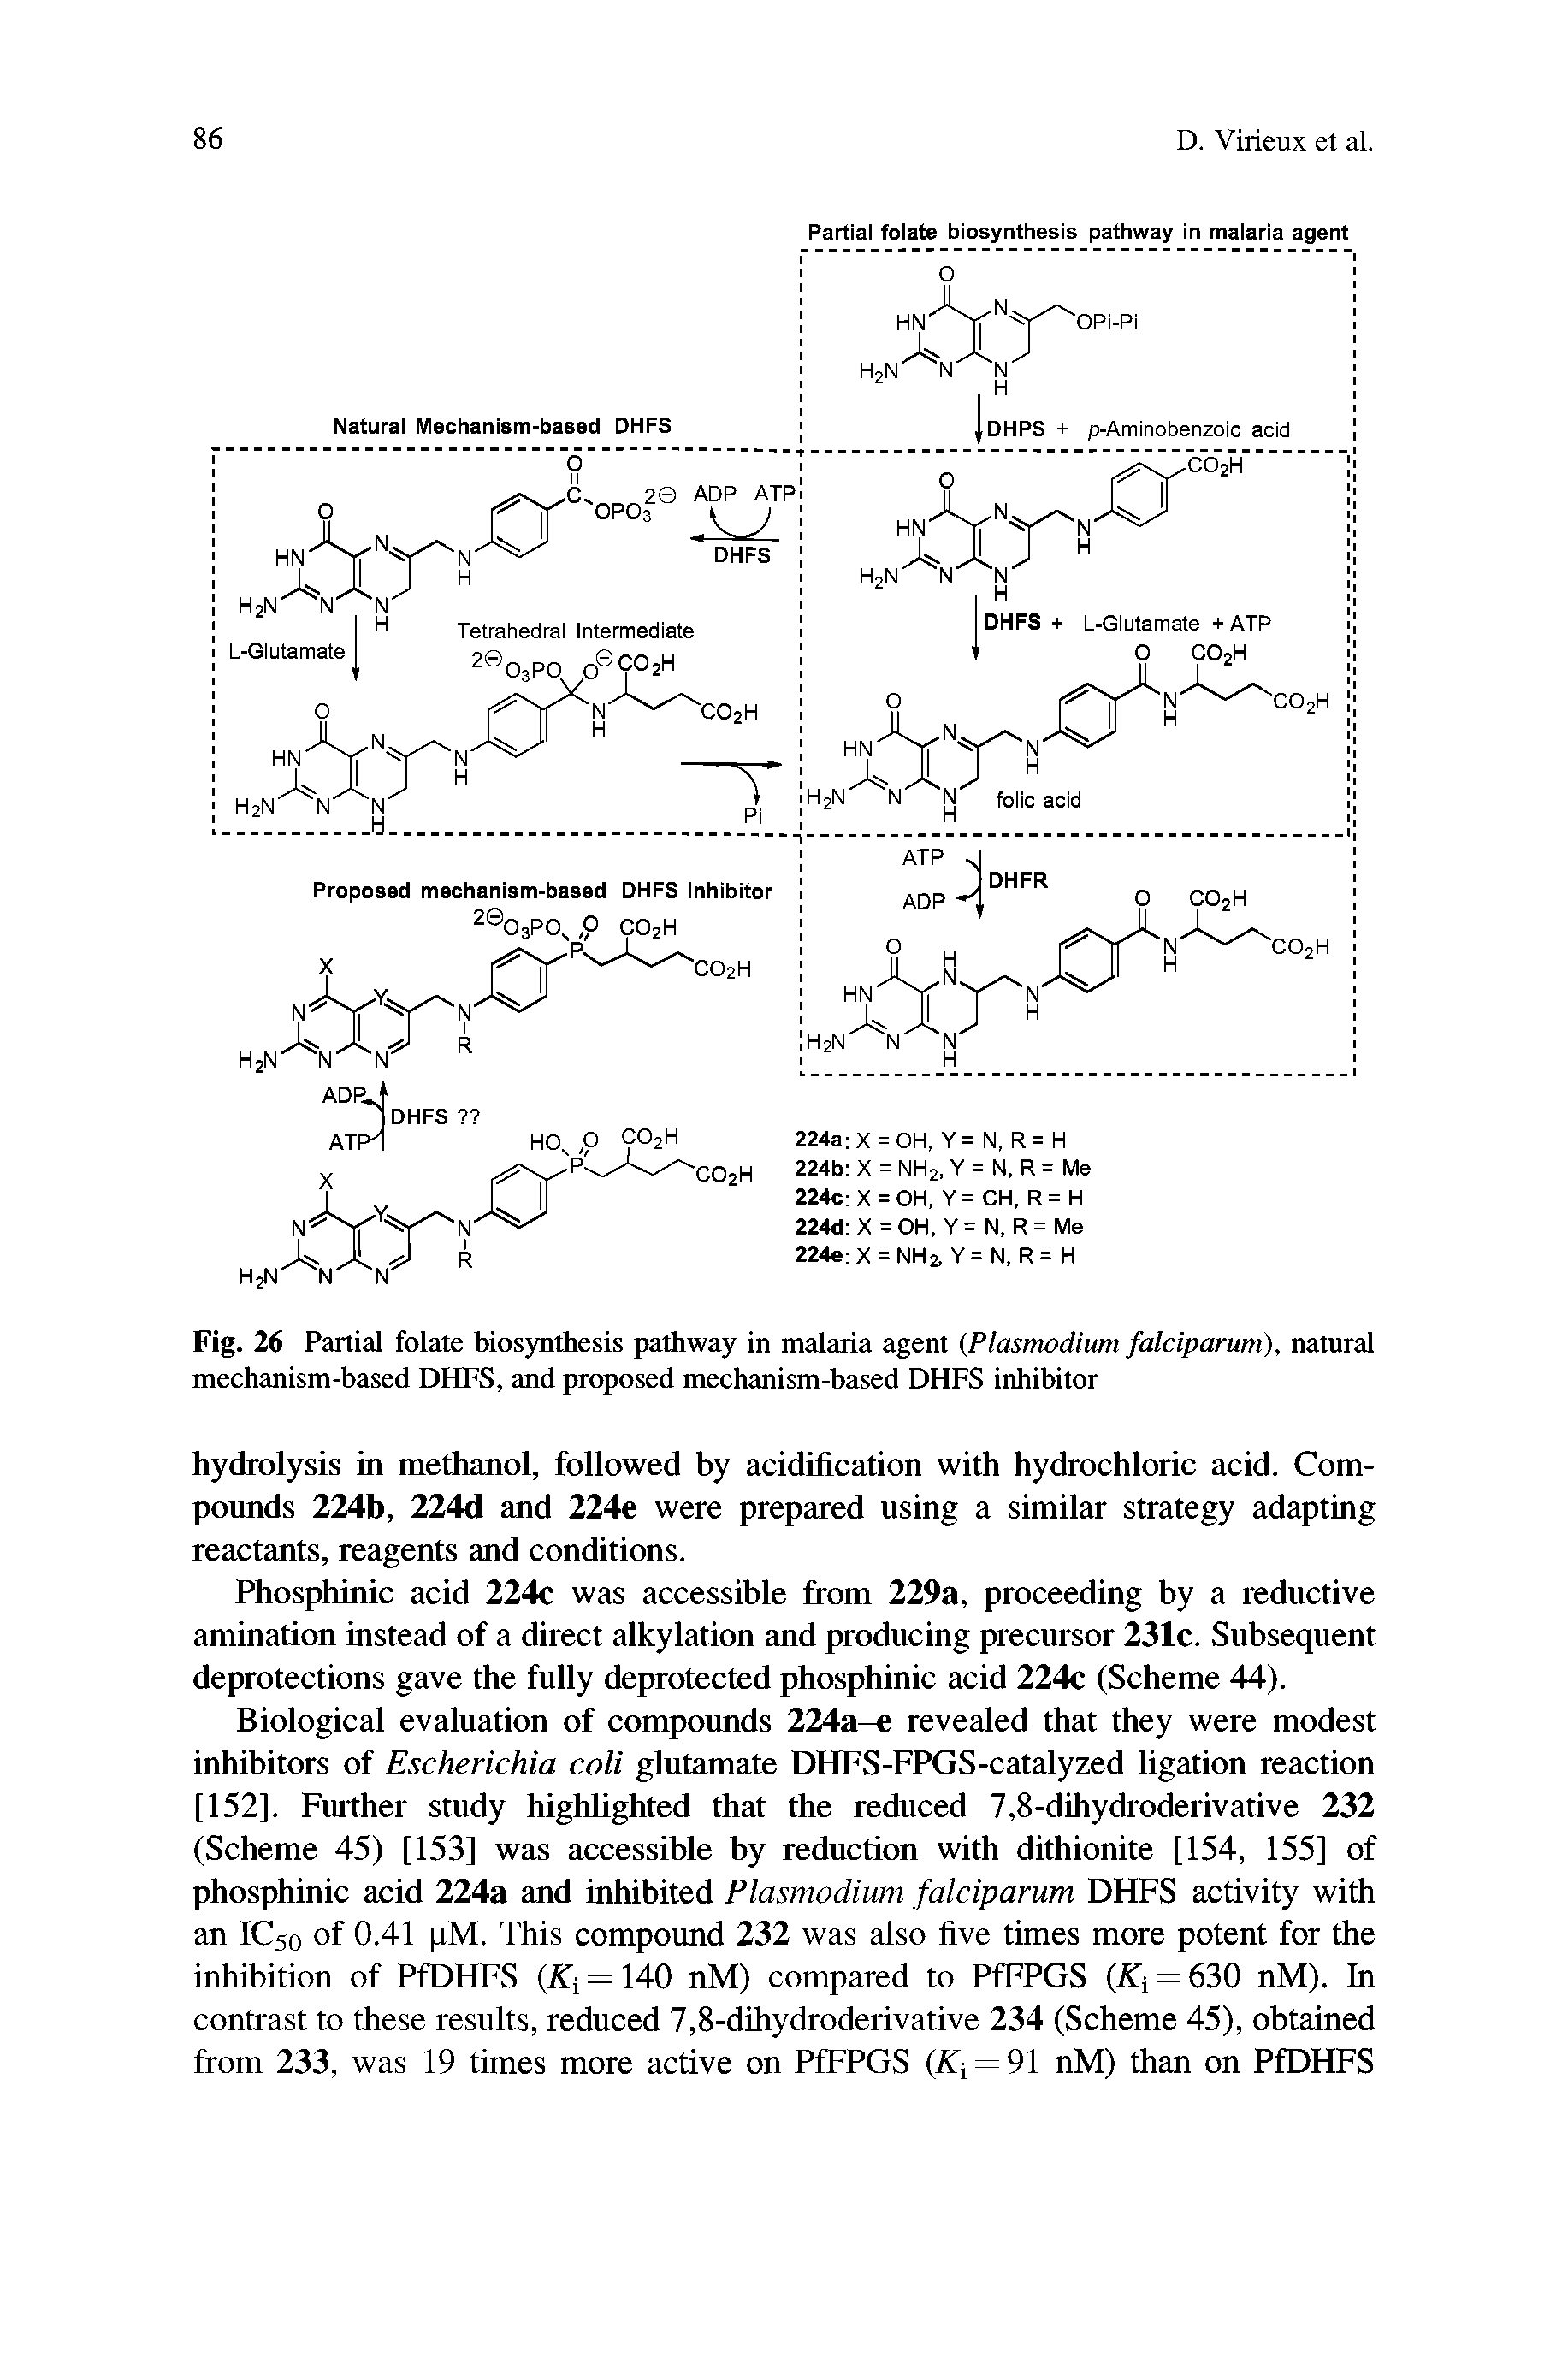 Fig. 26 Partial folate biosynthesis pathway in malaria agent Plasmodium falciparum), natural mechanism-based DHFS, and proposed mechanism-based DHFS inhibitor...